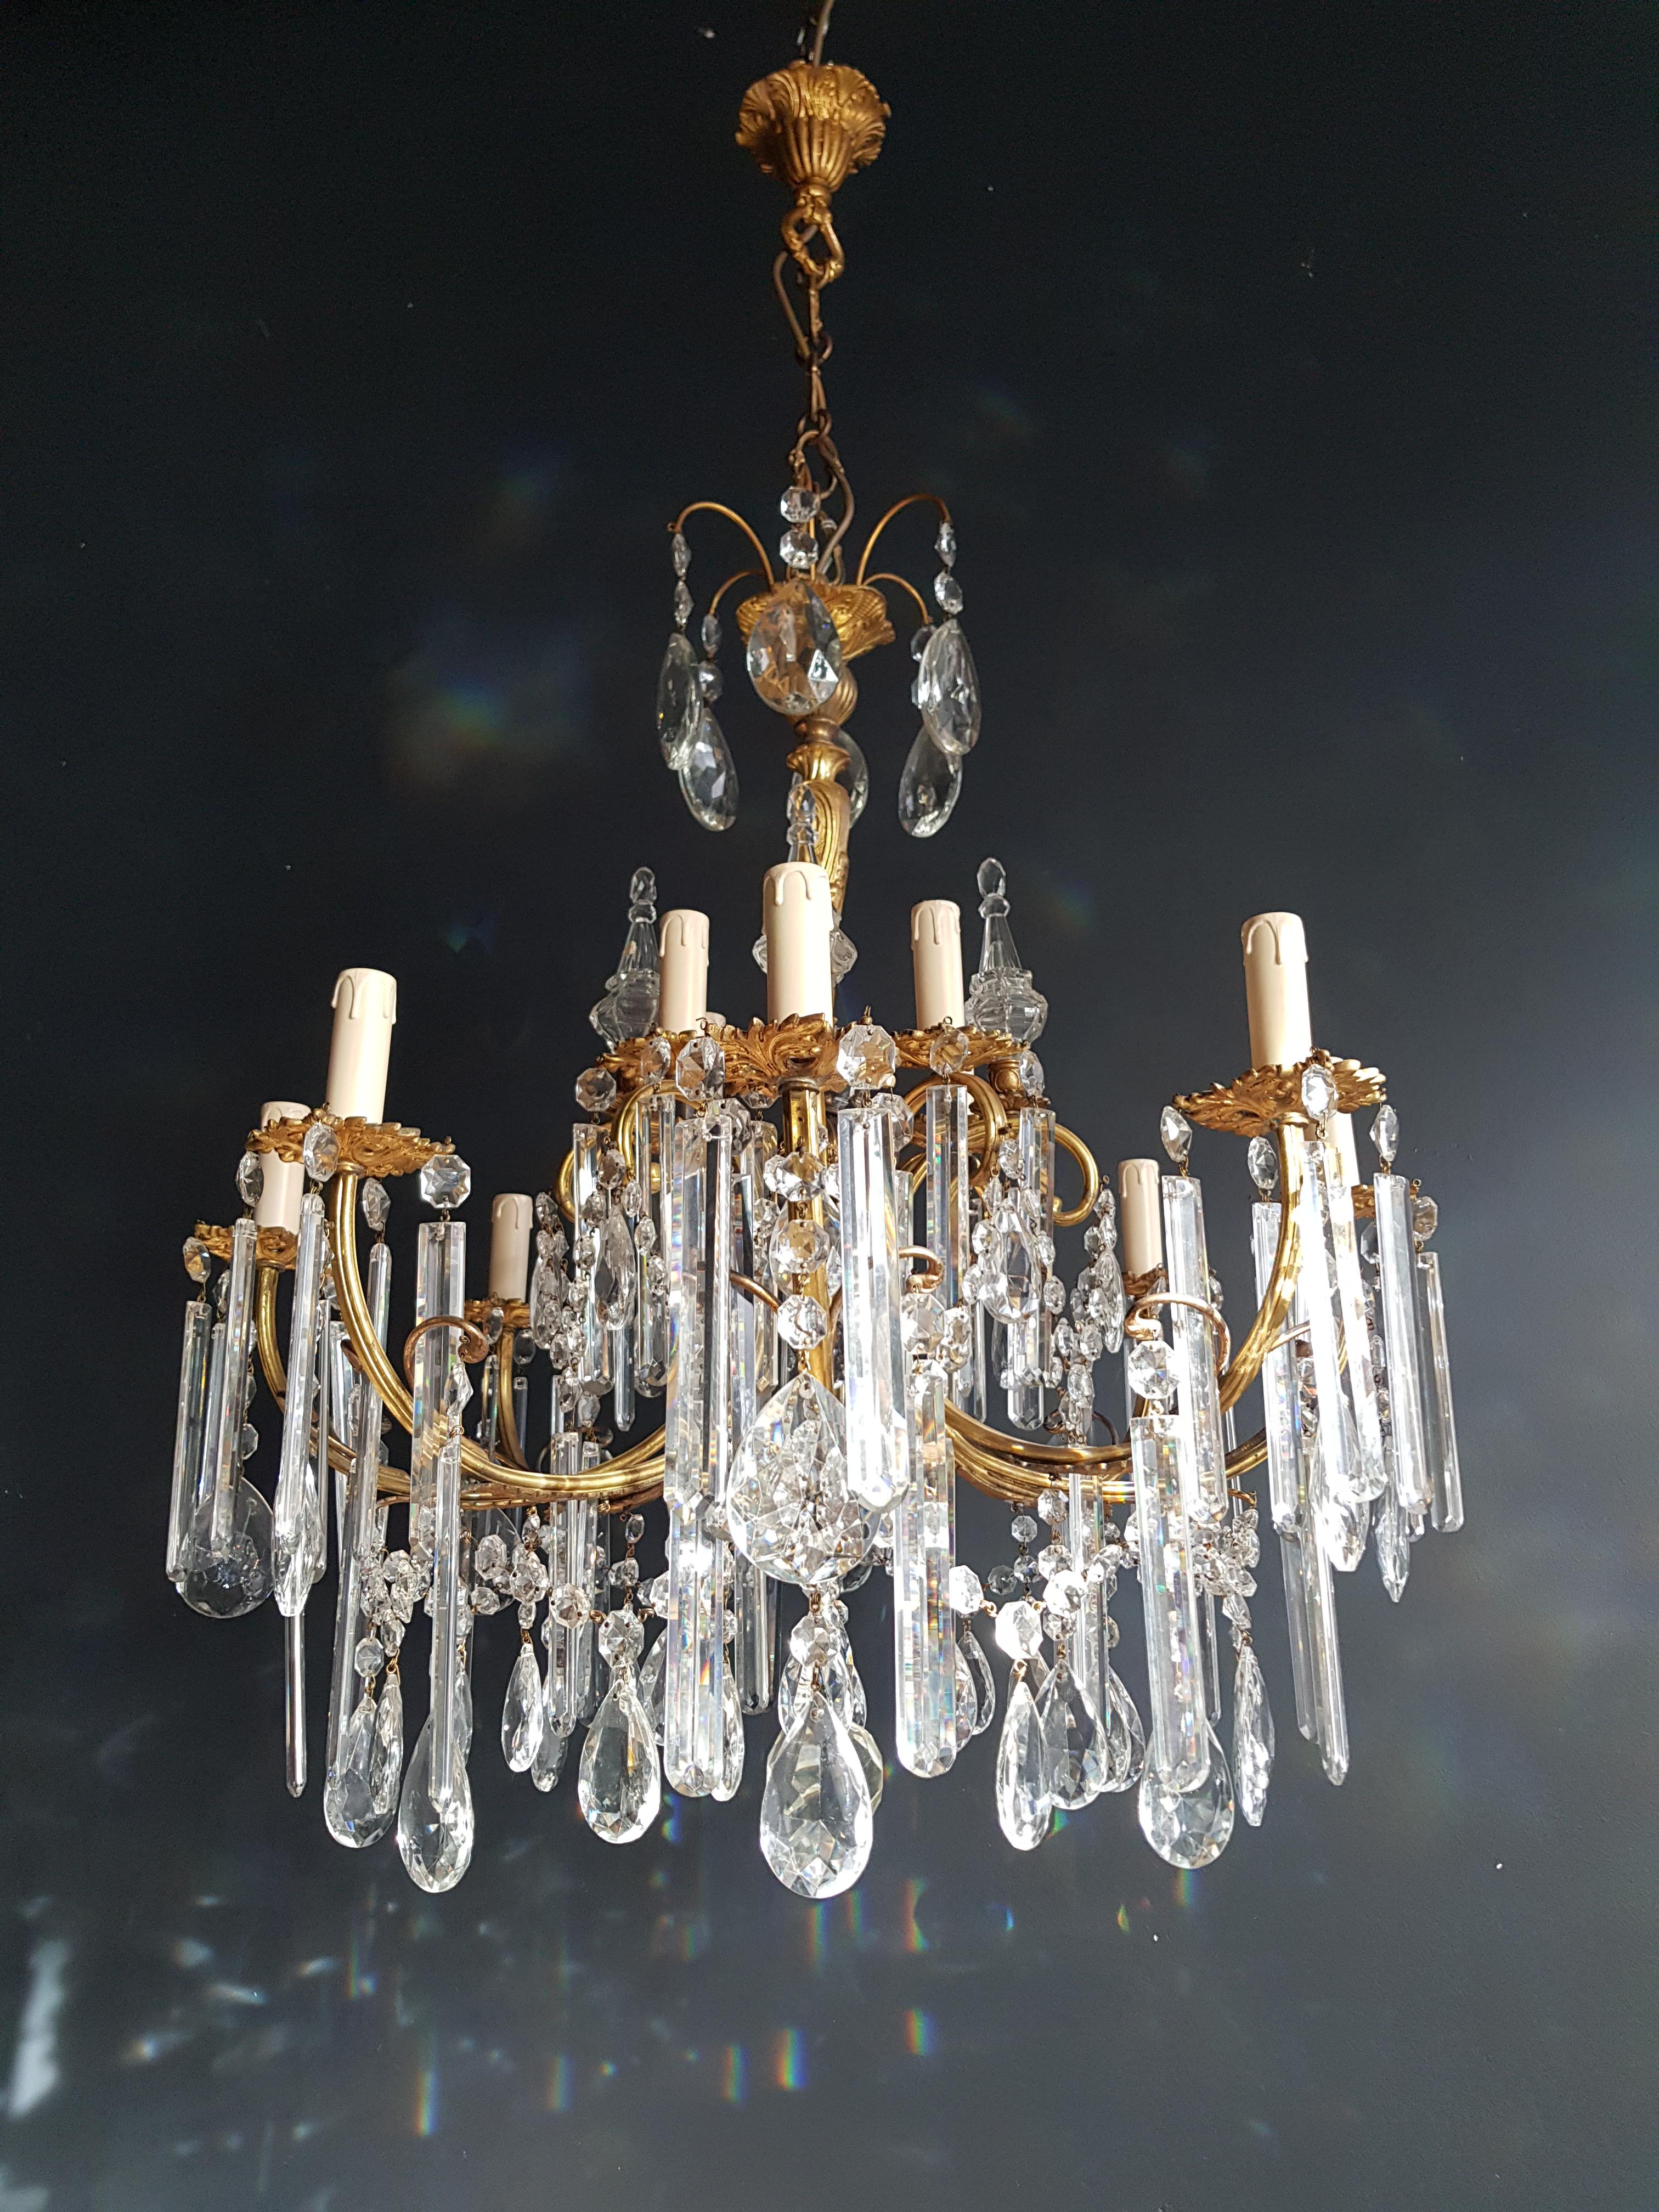 Gilded Crystal Bohemia Chandelier Antique Ceiling Lamp Lustre Art Nouveau Candel (Handgefertigt)